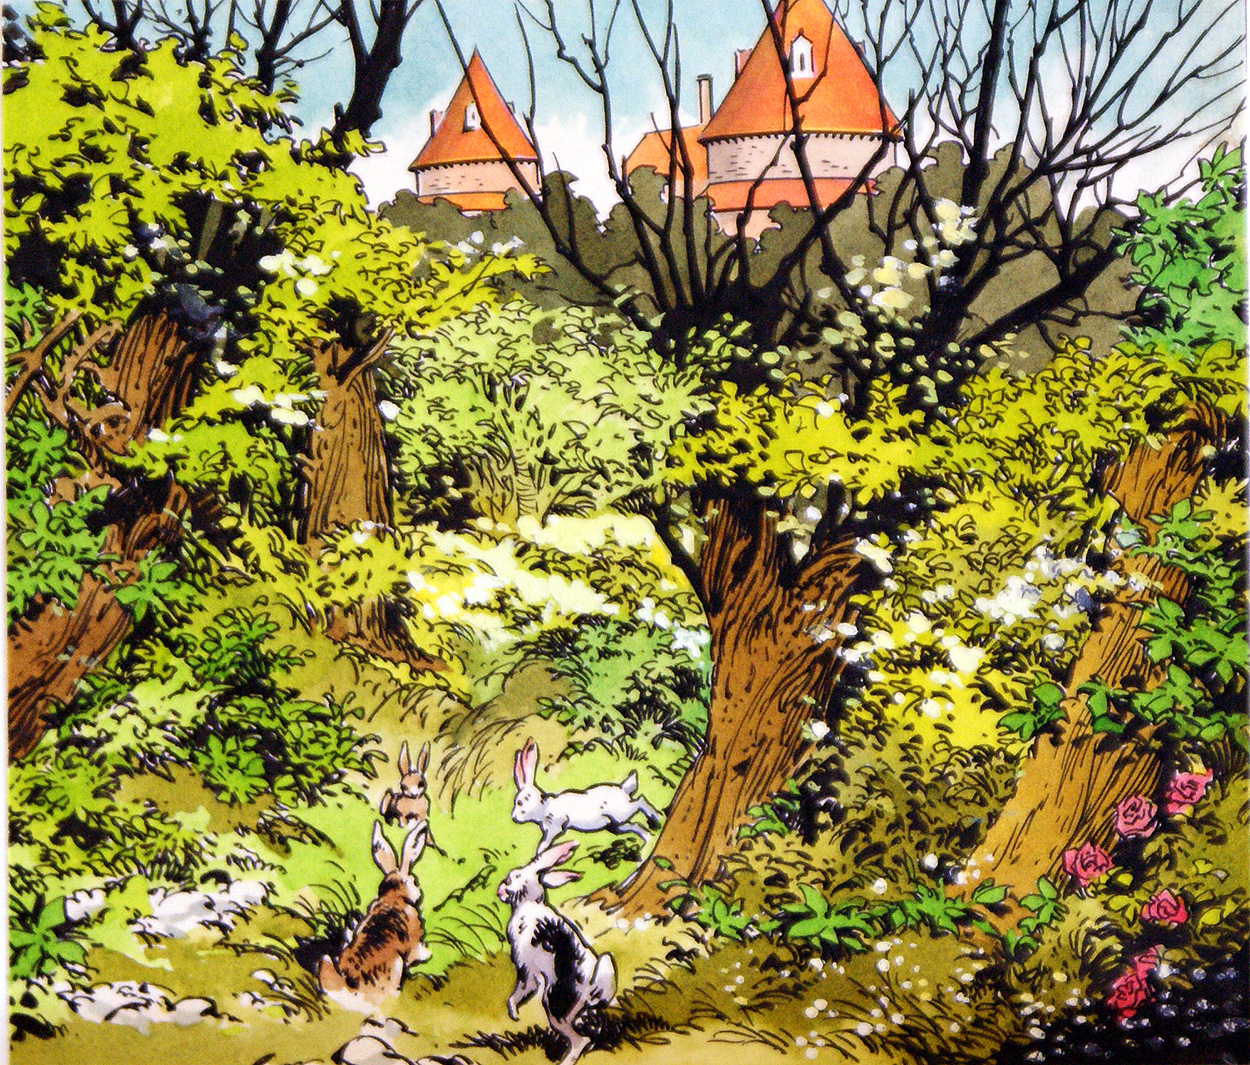 Fairytale Castle (Original) art by Sleeping Beauty (Blasco) at The Illustration Art Gallery